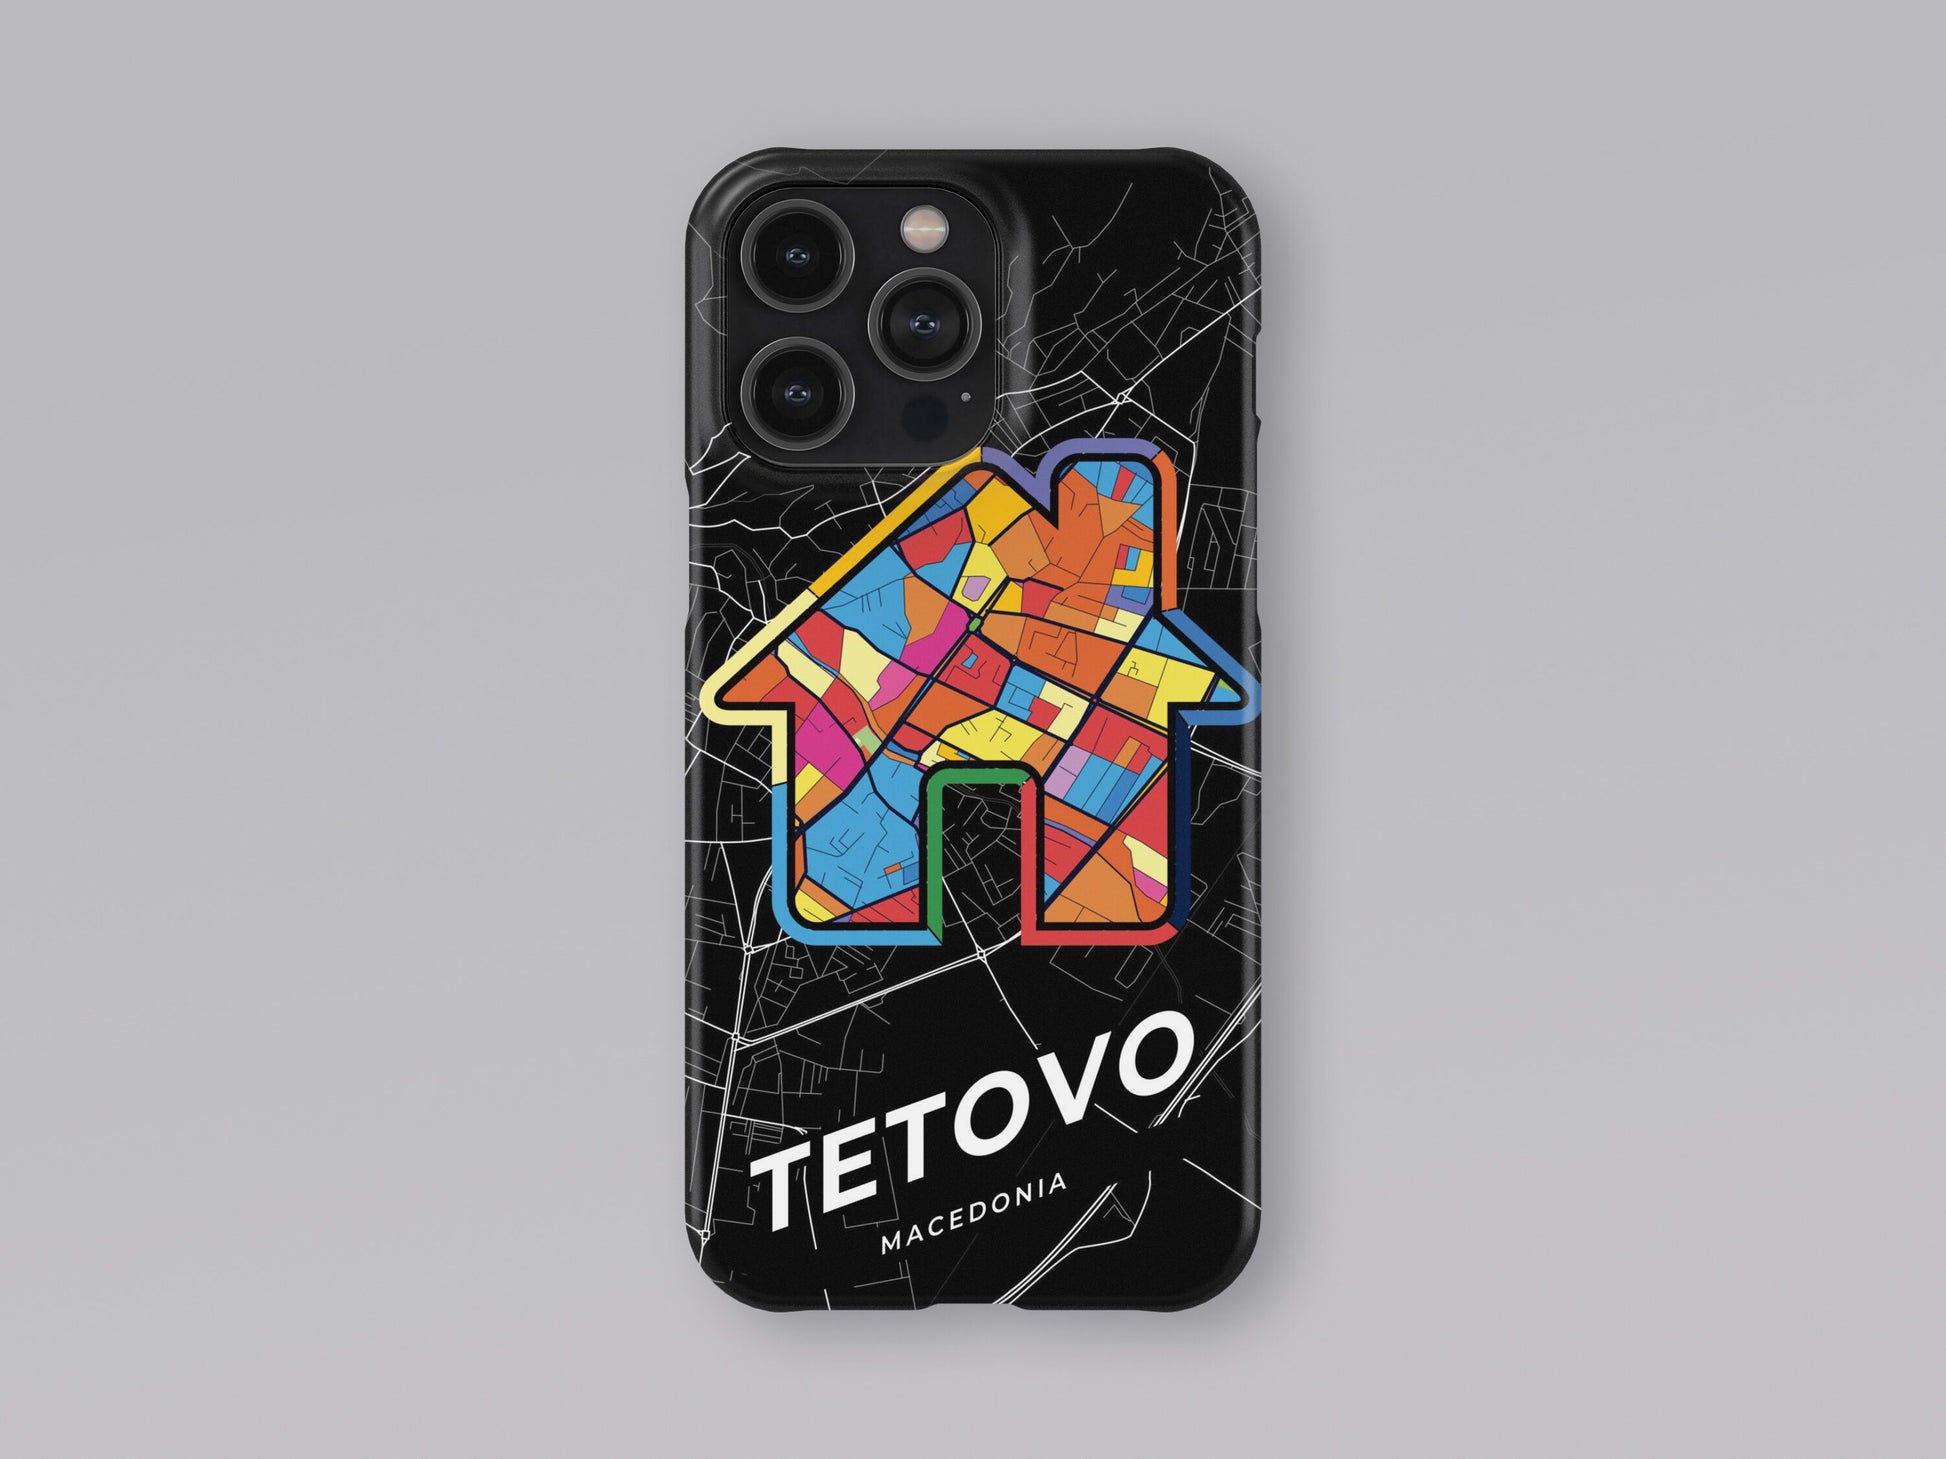 Tetovo North Macedonia slim phone case with colorful icon 3